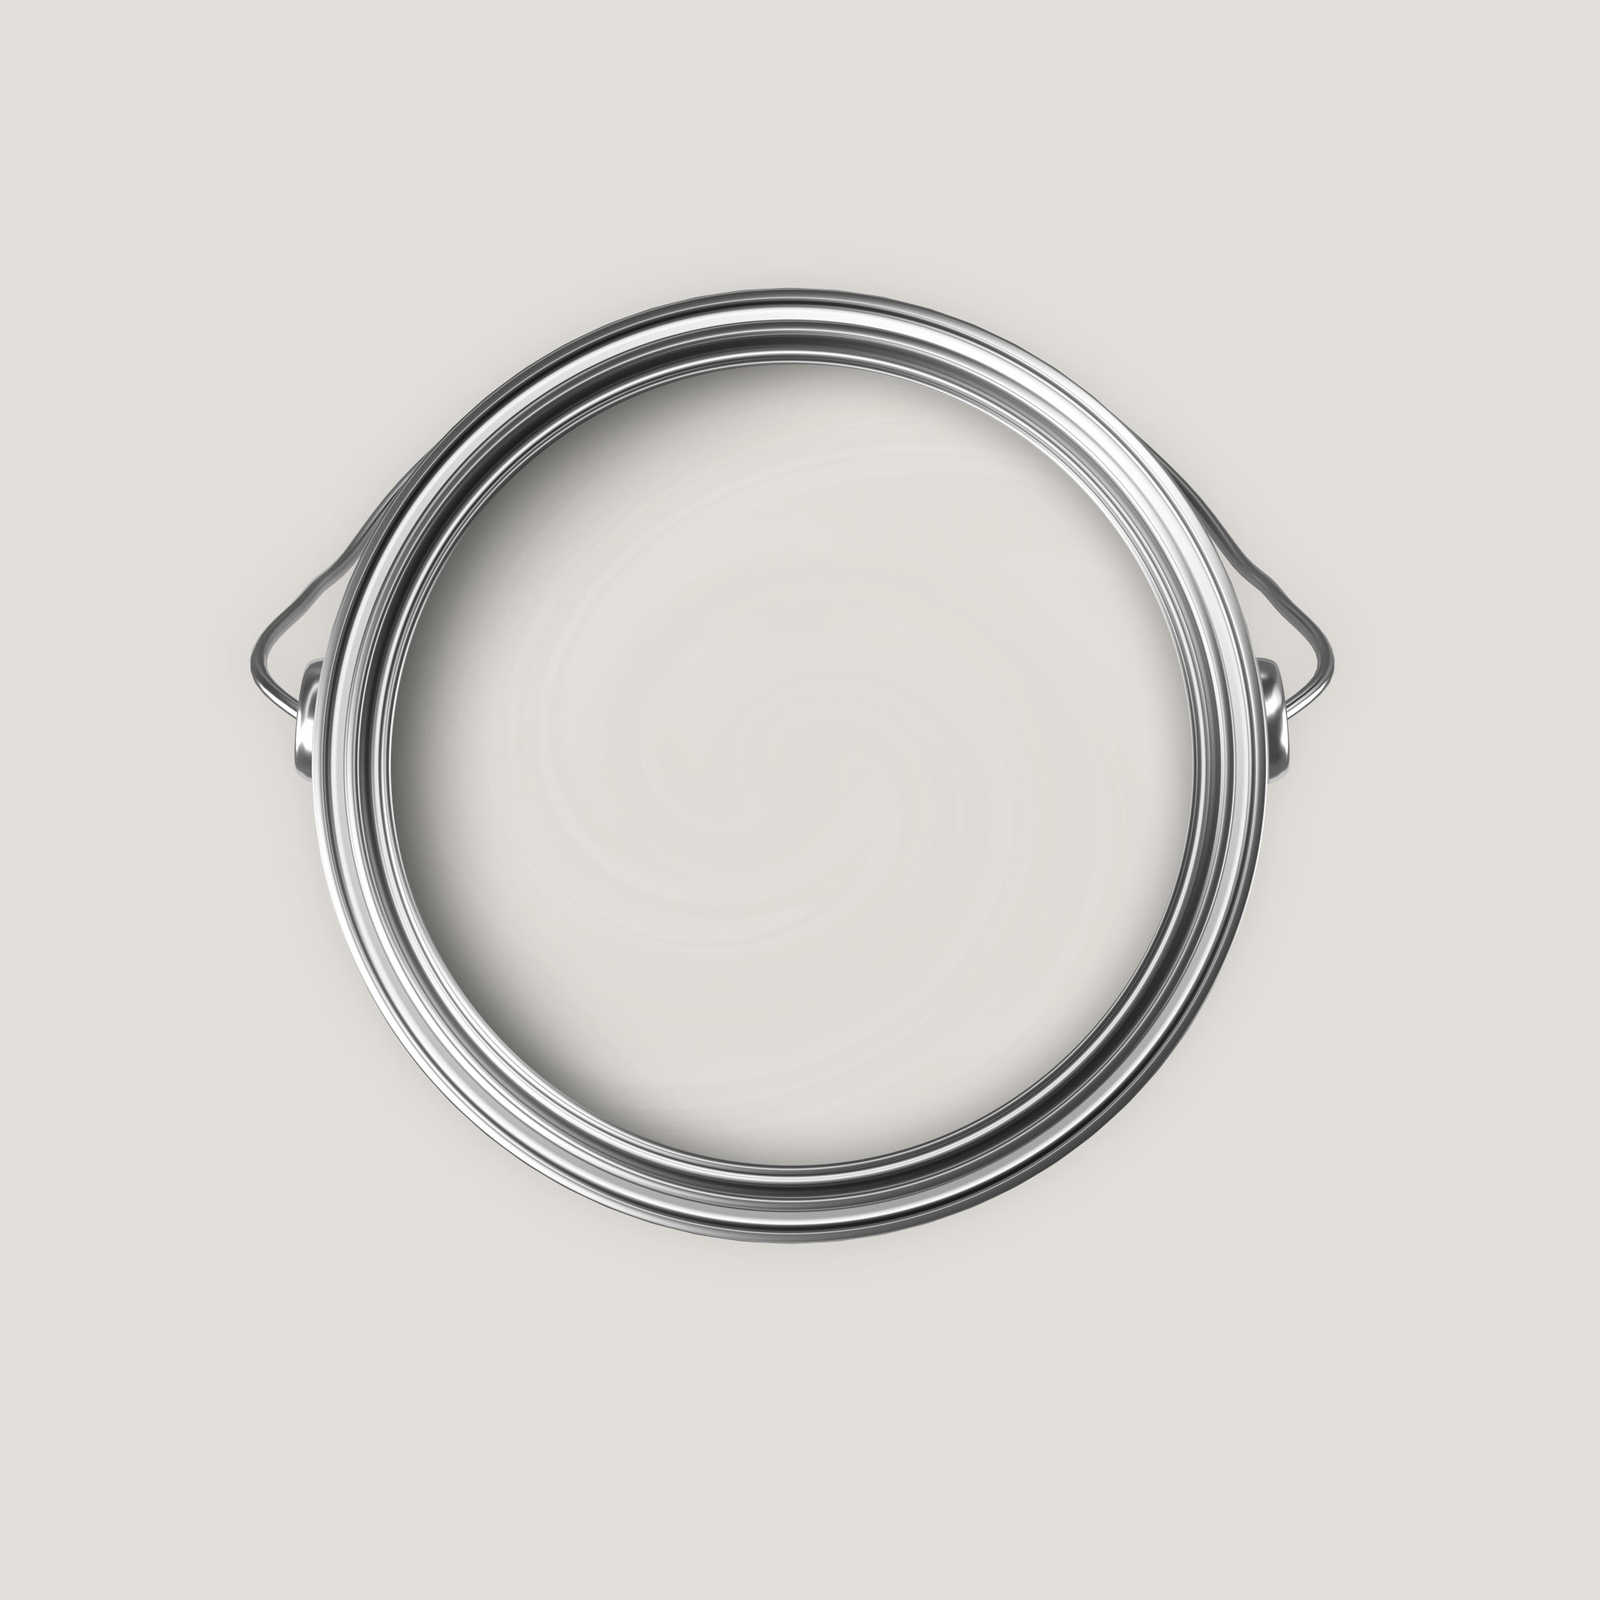             Premium Wandfarbe zeitloses Hellgrau »Creamy Grey« NW108 – 5 Liter
        